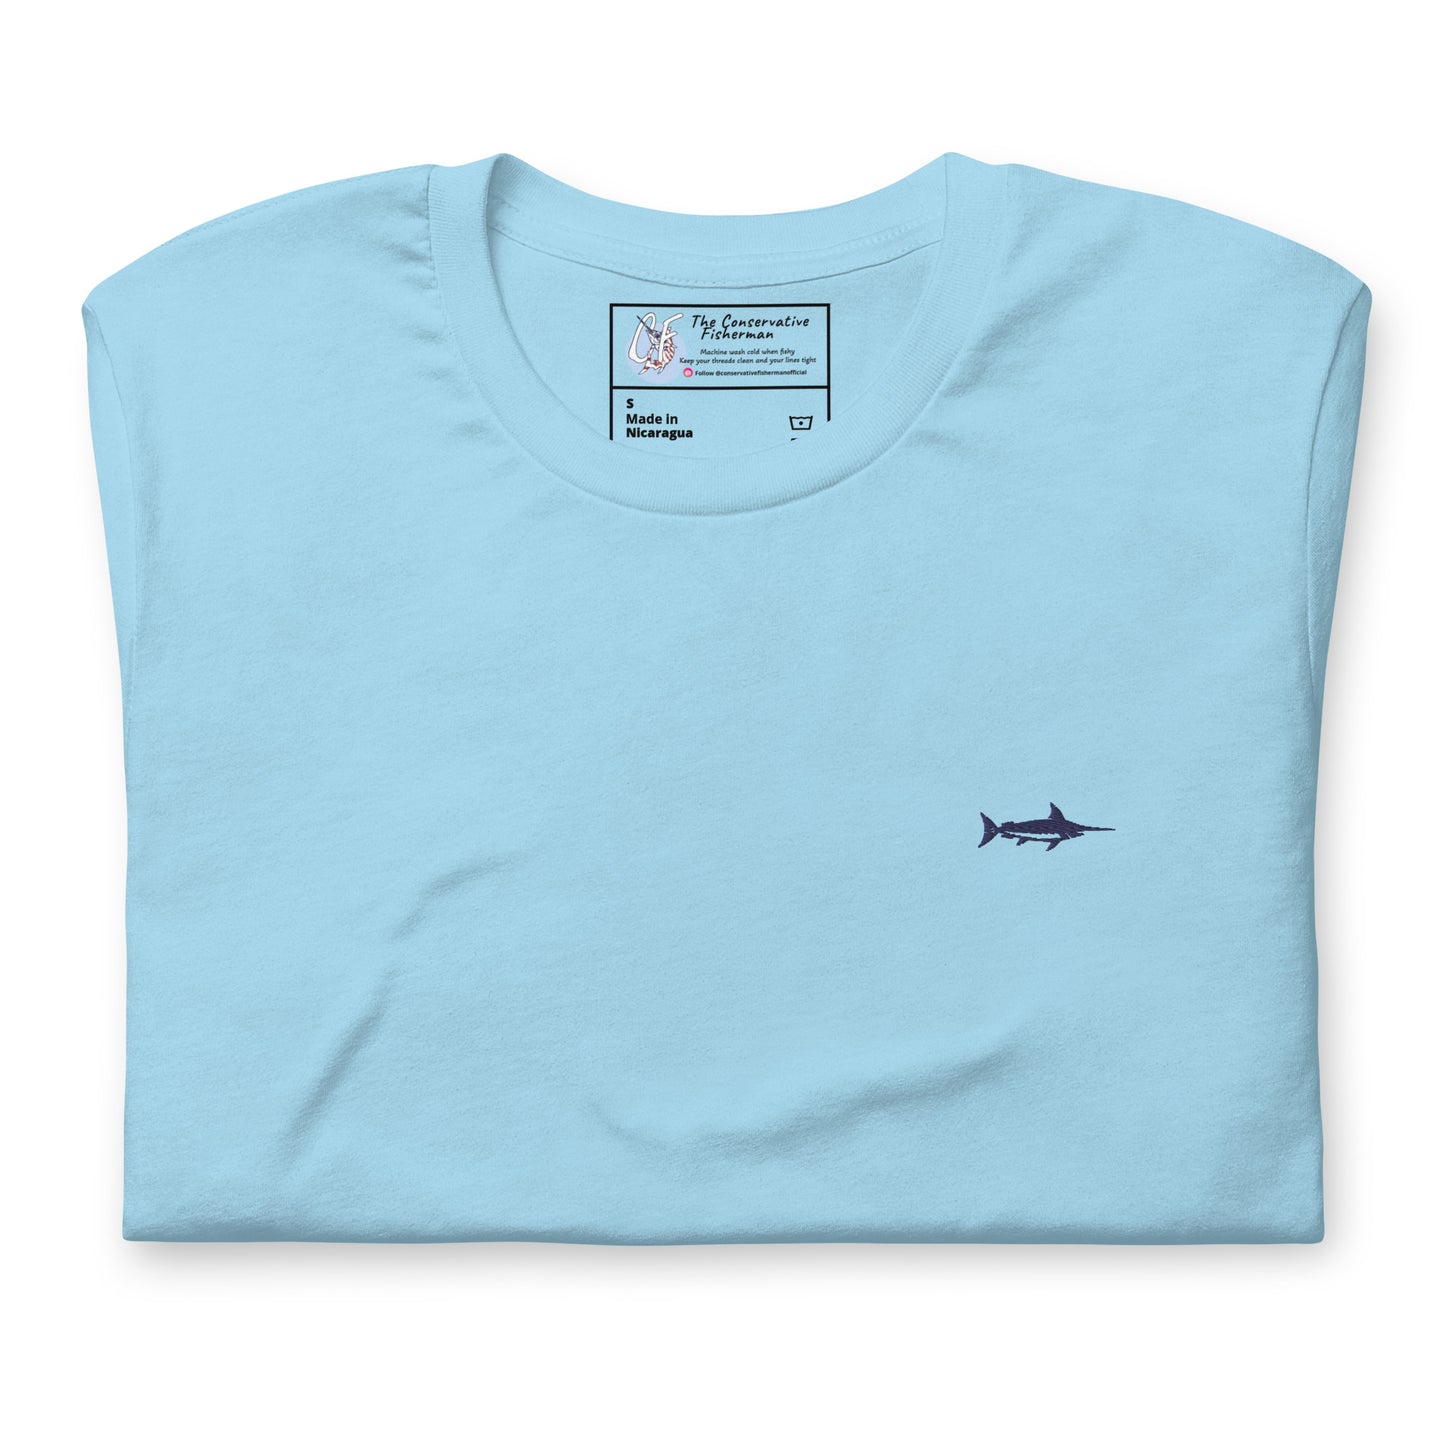 'Swordfish' Premium Embroidered Shirt